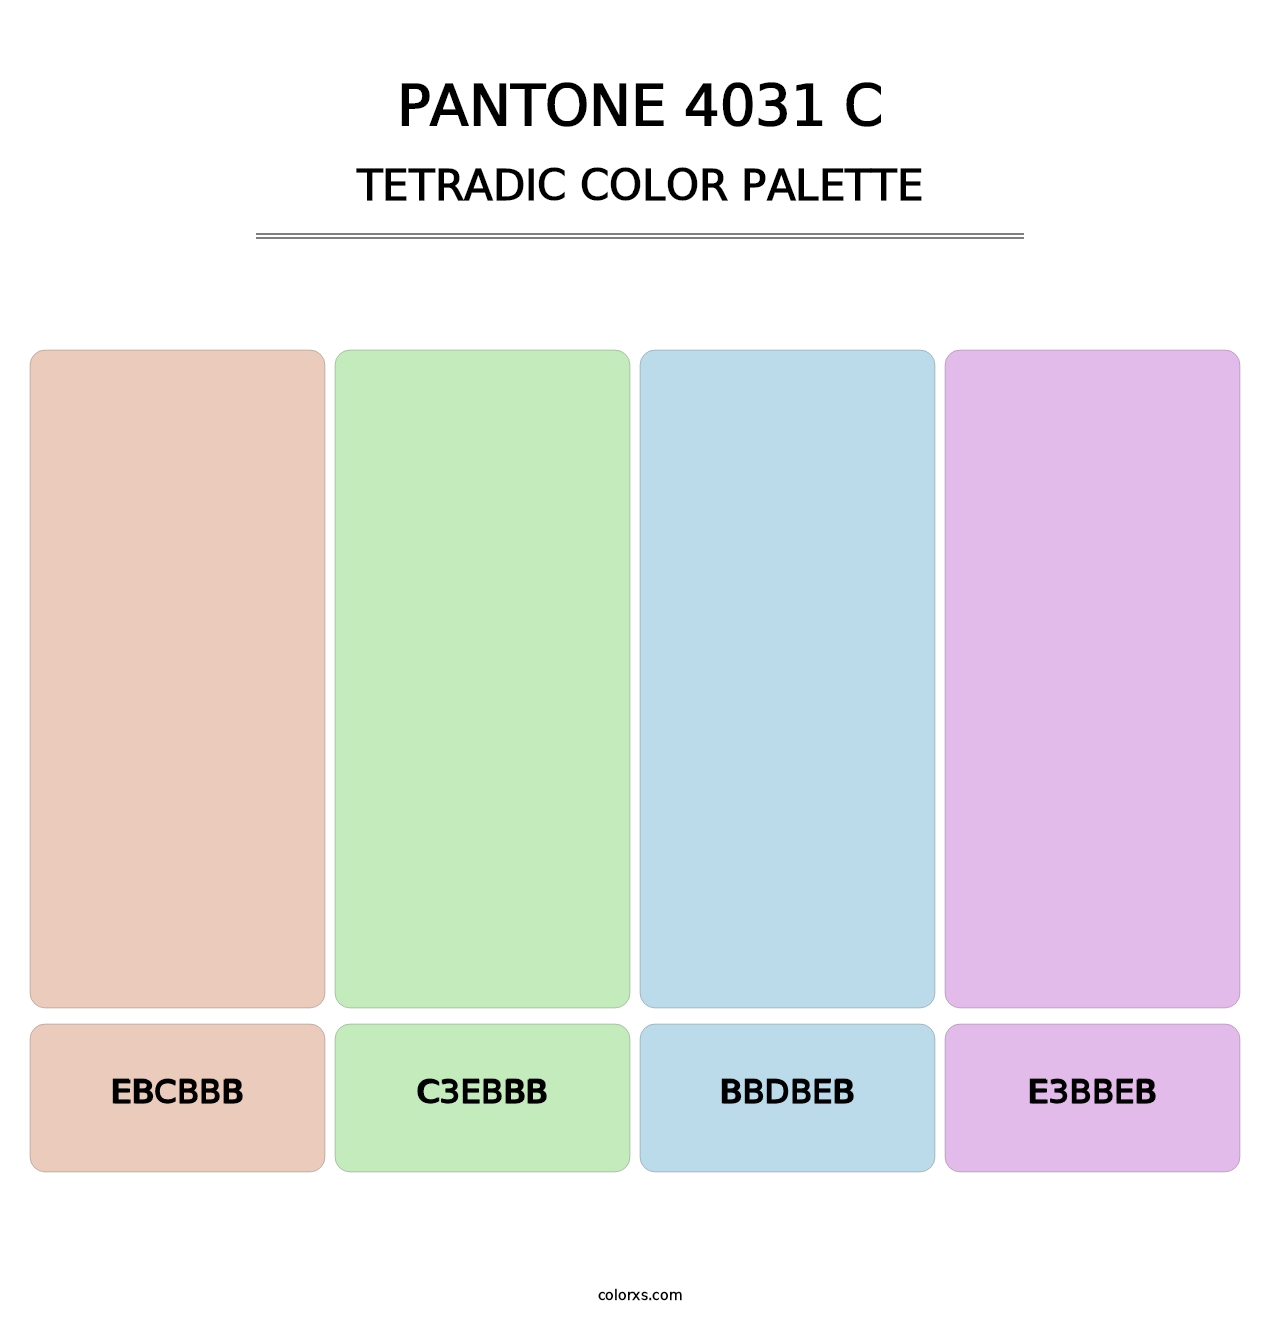 PANTONE 4031 C - Tetradic Color Palette